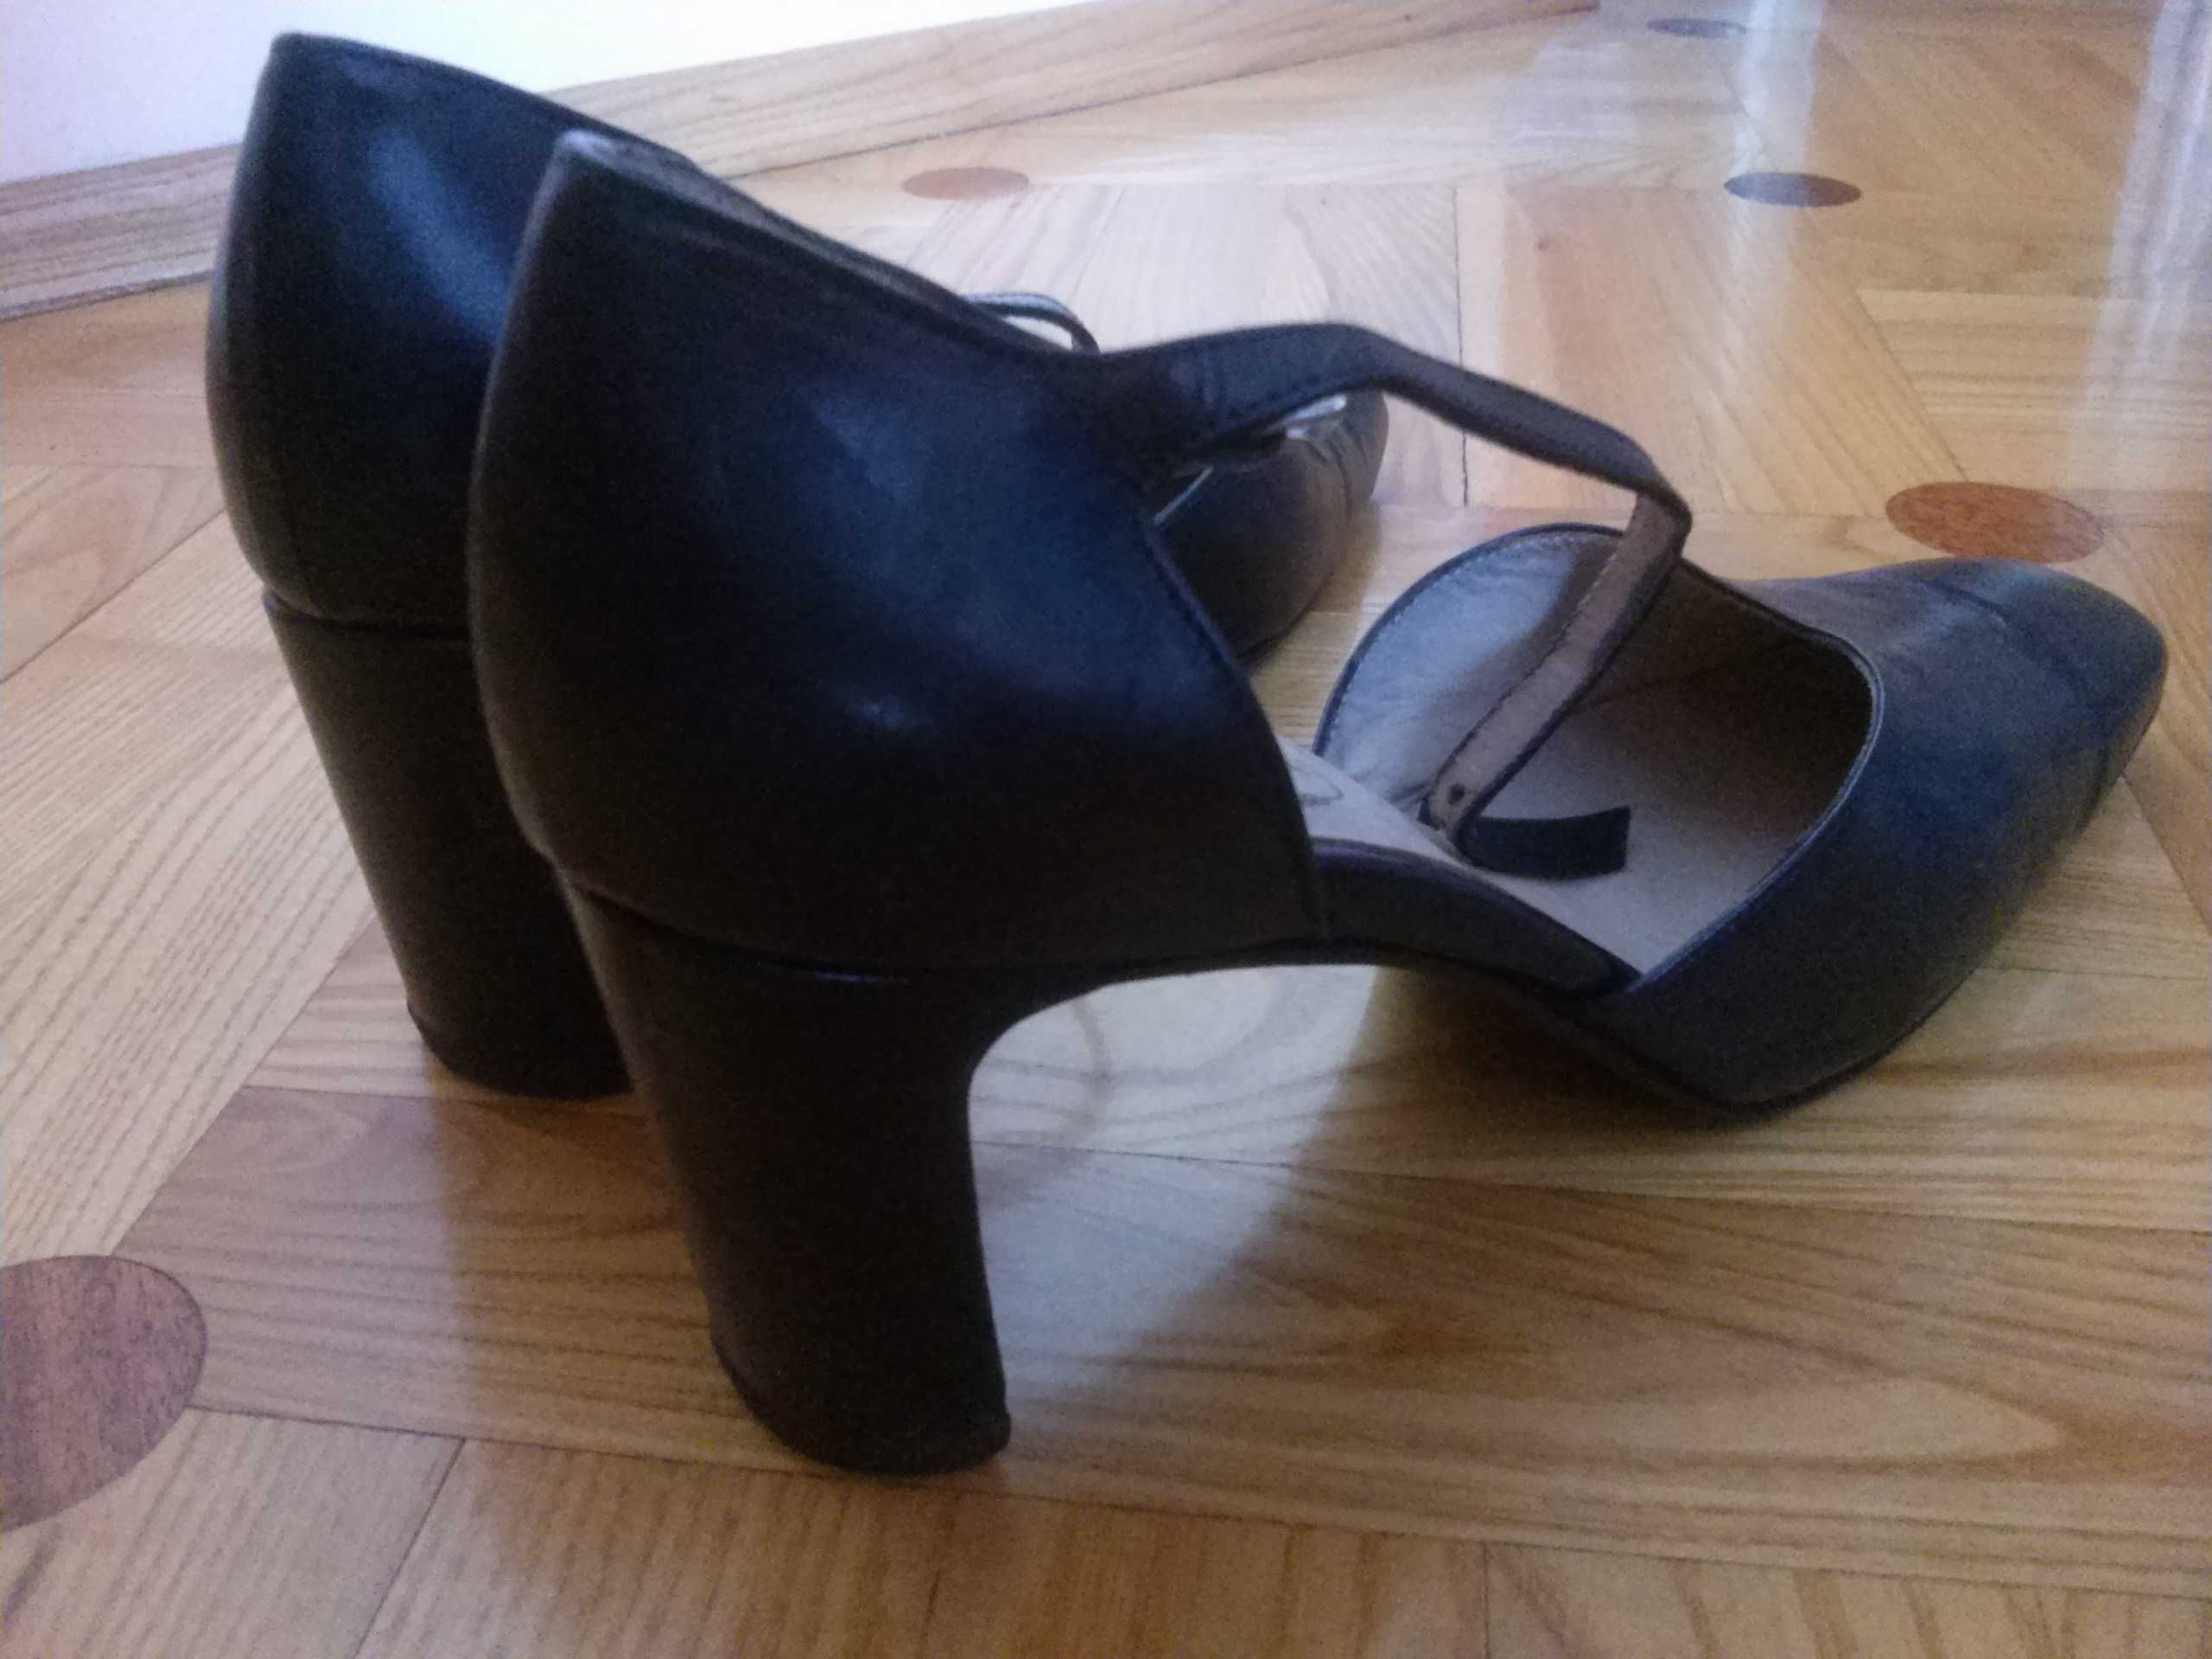 czółenka, damskie buty na obcasie, rozmiar 38 - czarne Massimo Troise